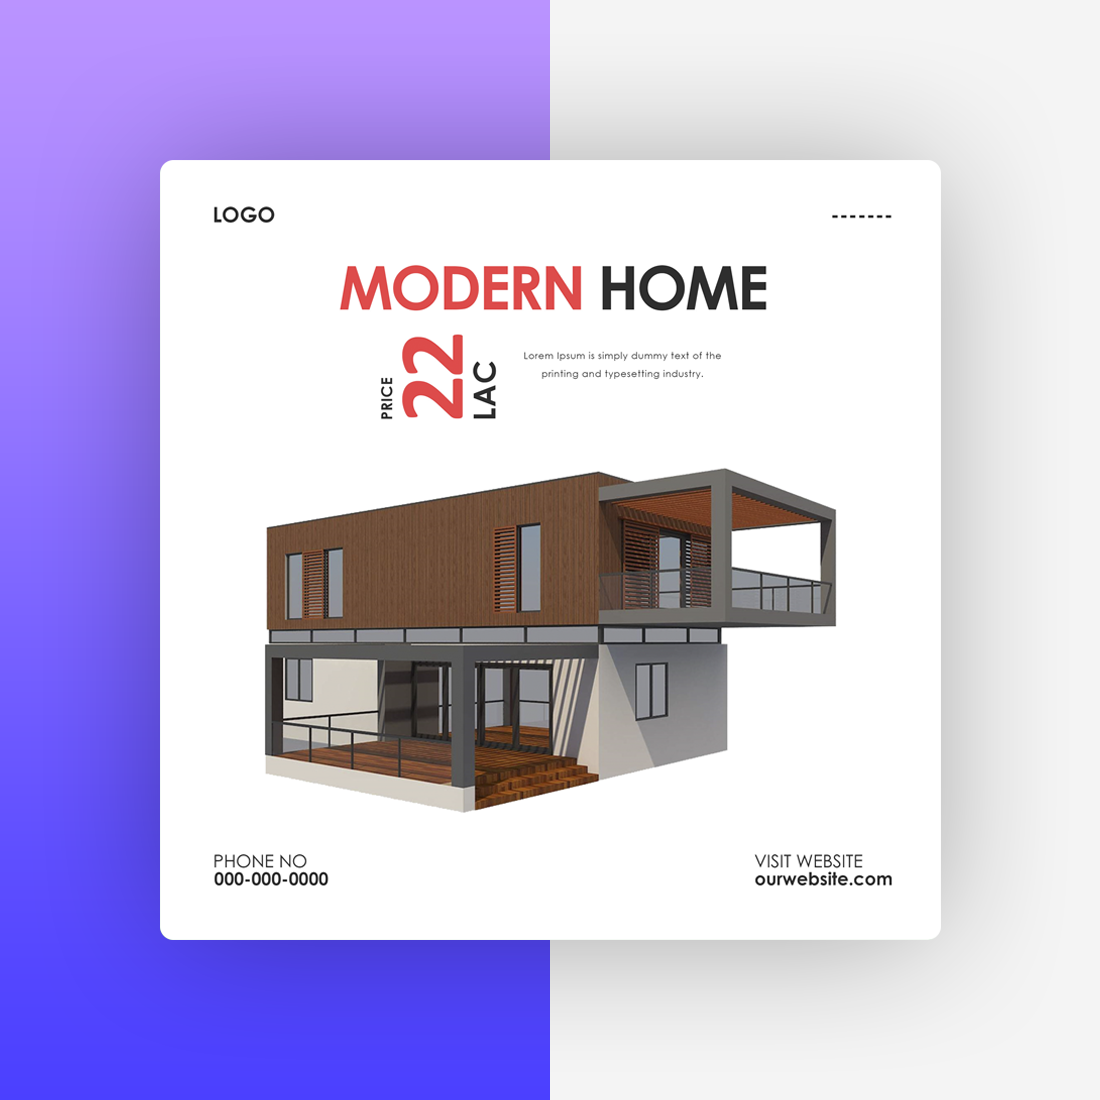 Modern Home Real Estate Social Media Poster Design cover image.